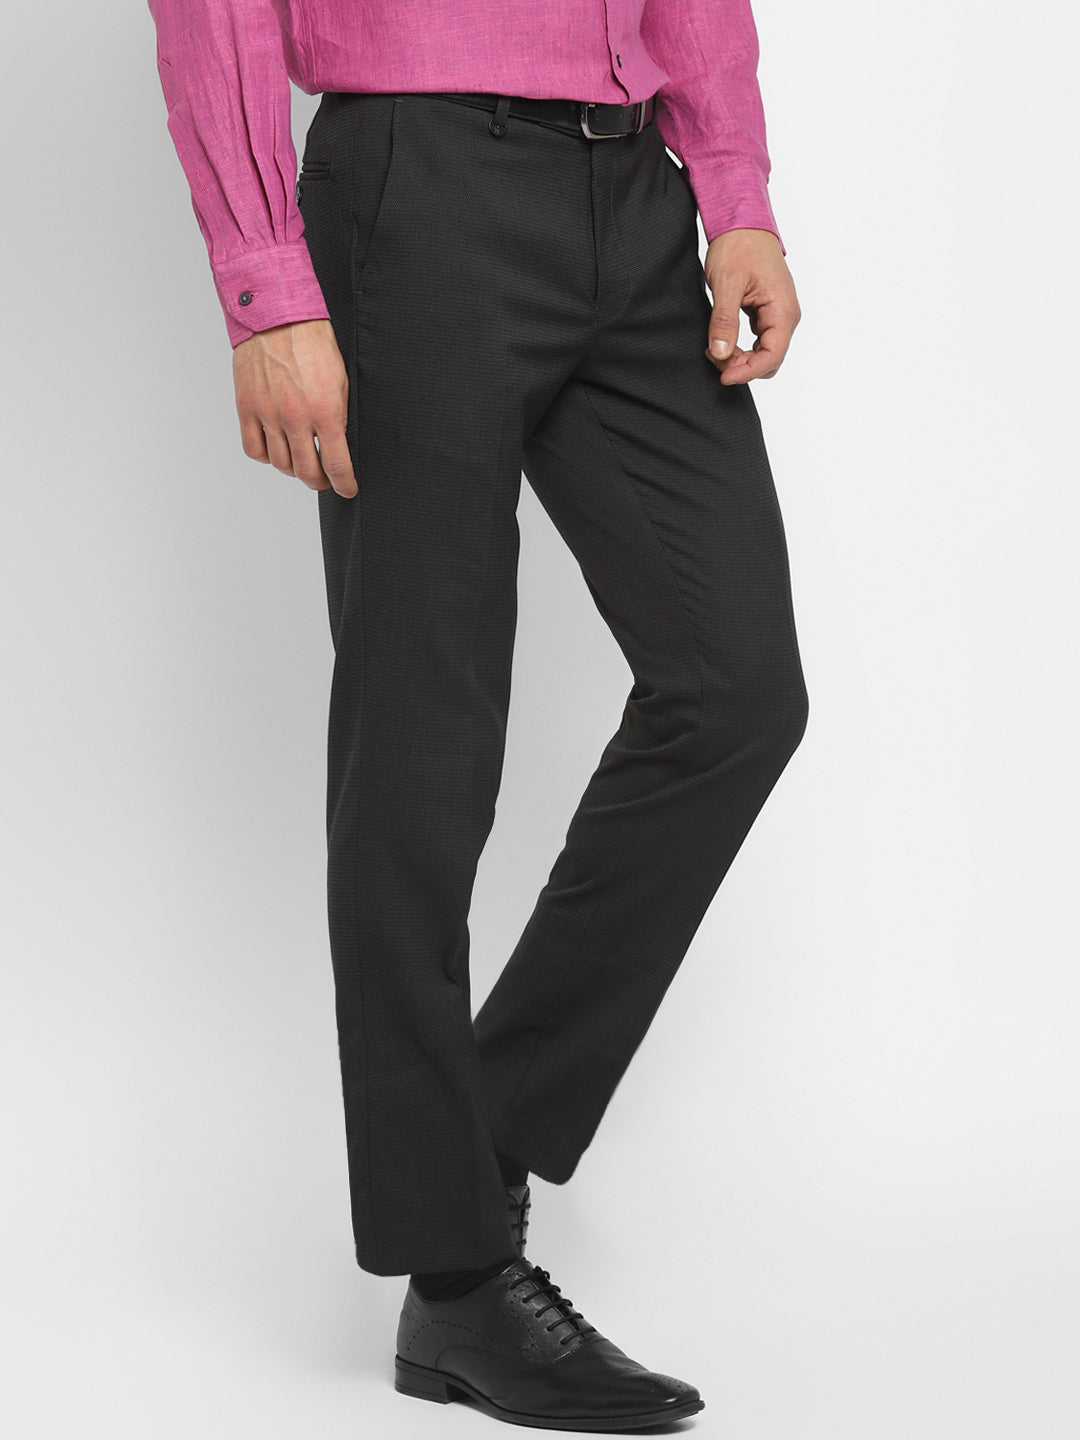 Charcoal Slim Fit Self Design Trouser